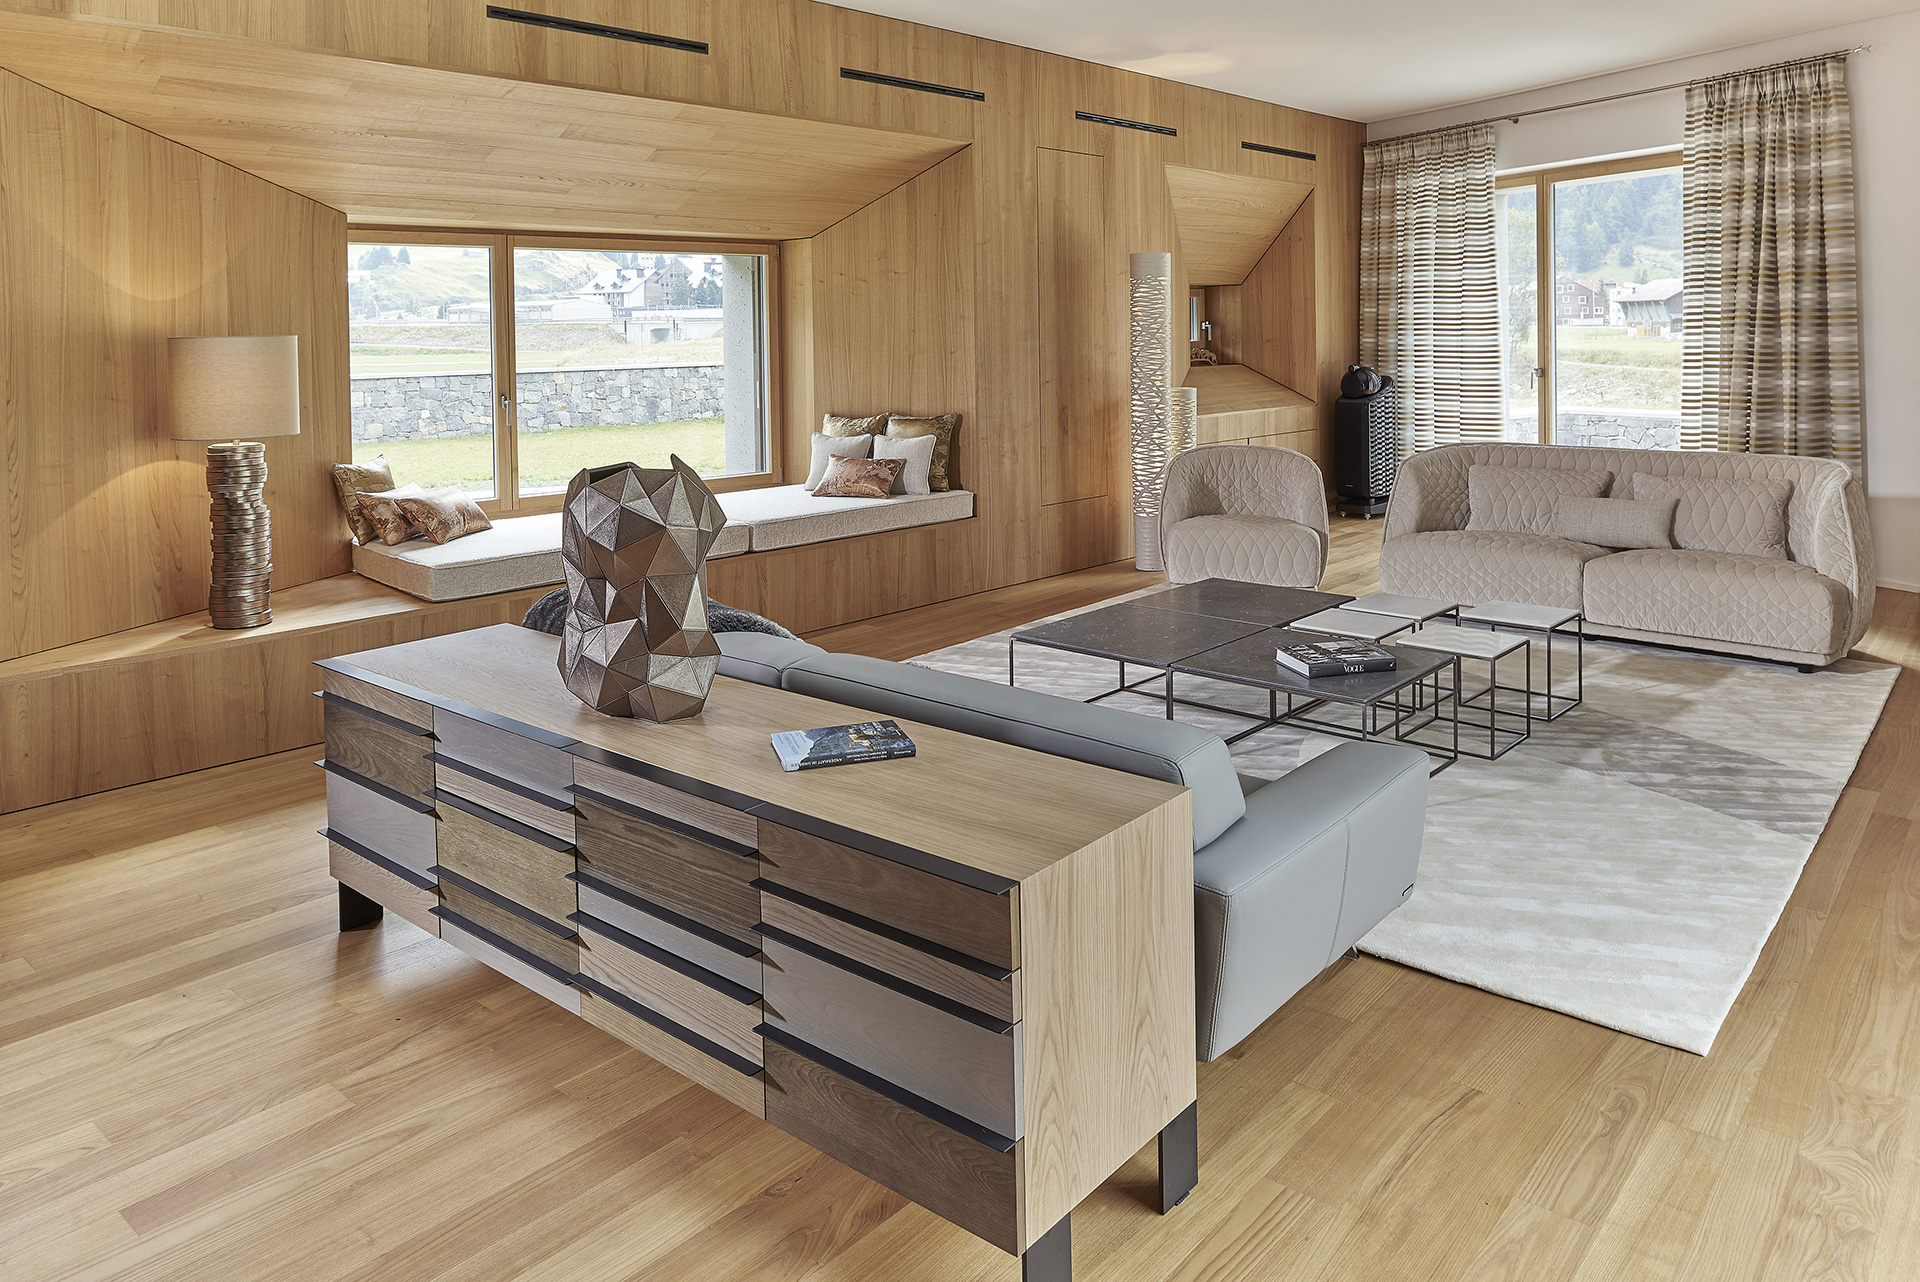 Lounge of a luxurious villa in Alps by Borella Art Design